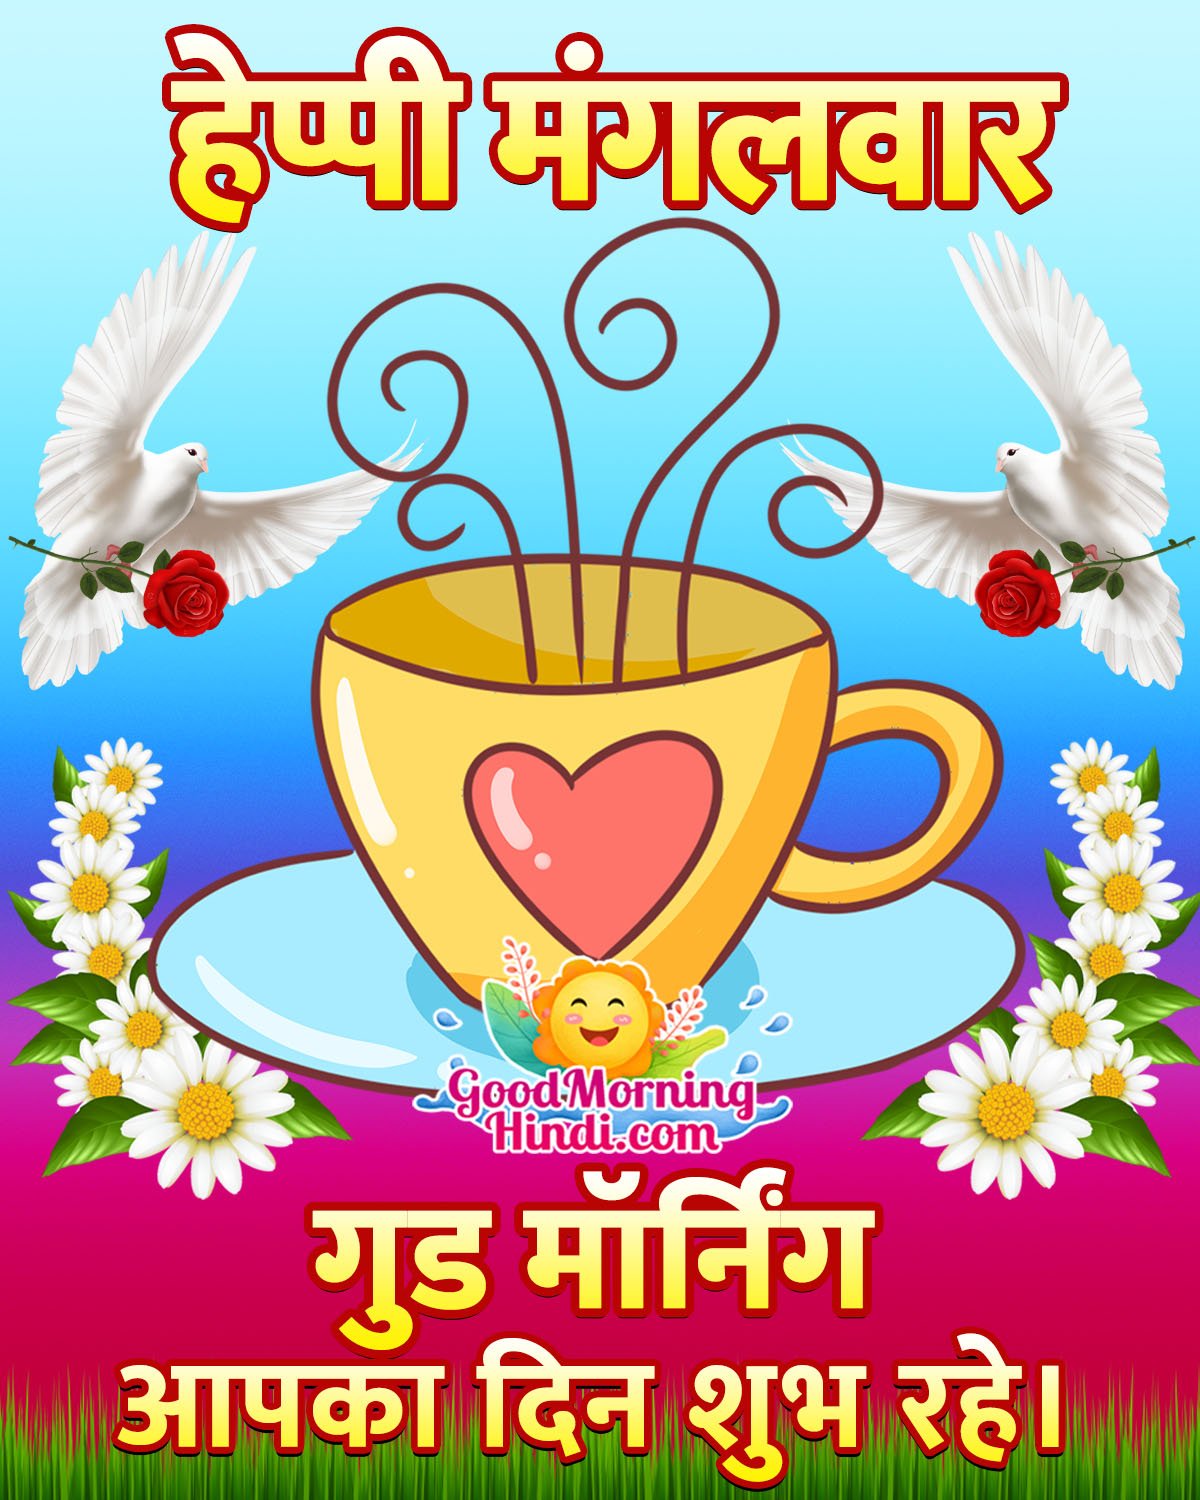 Happy Mangalwar Good Morning Image